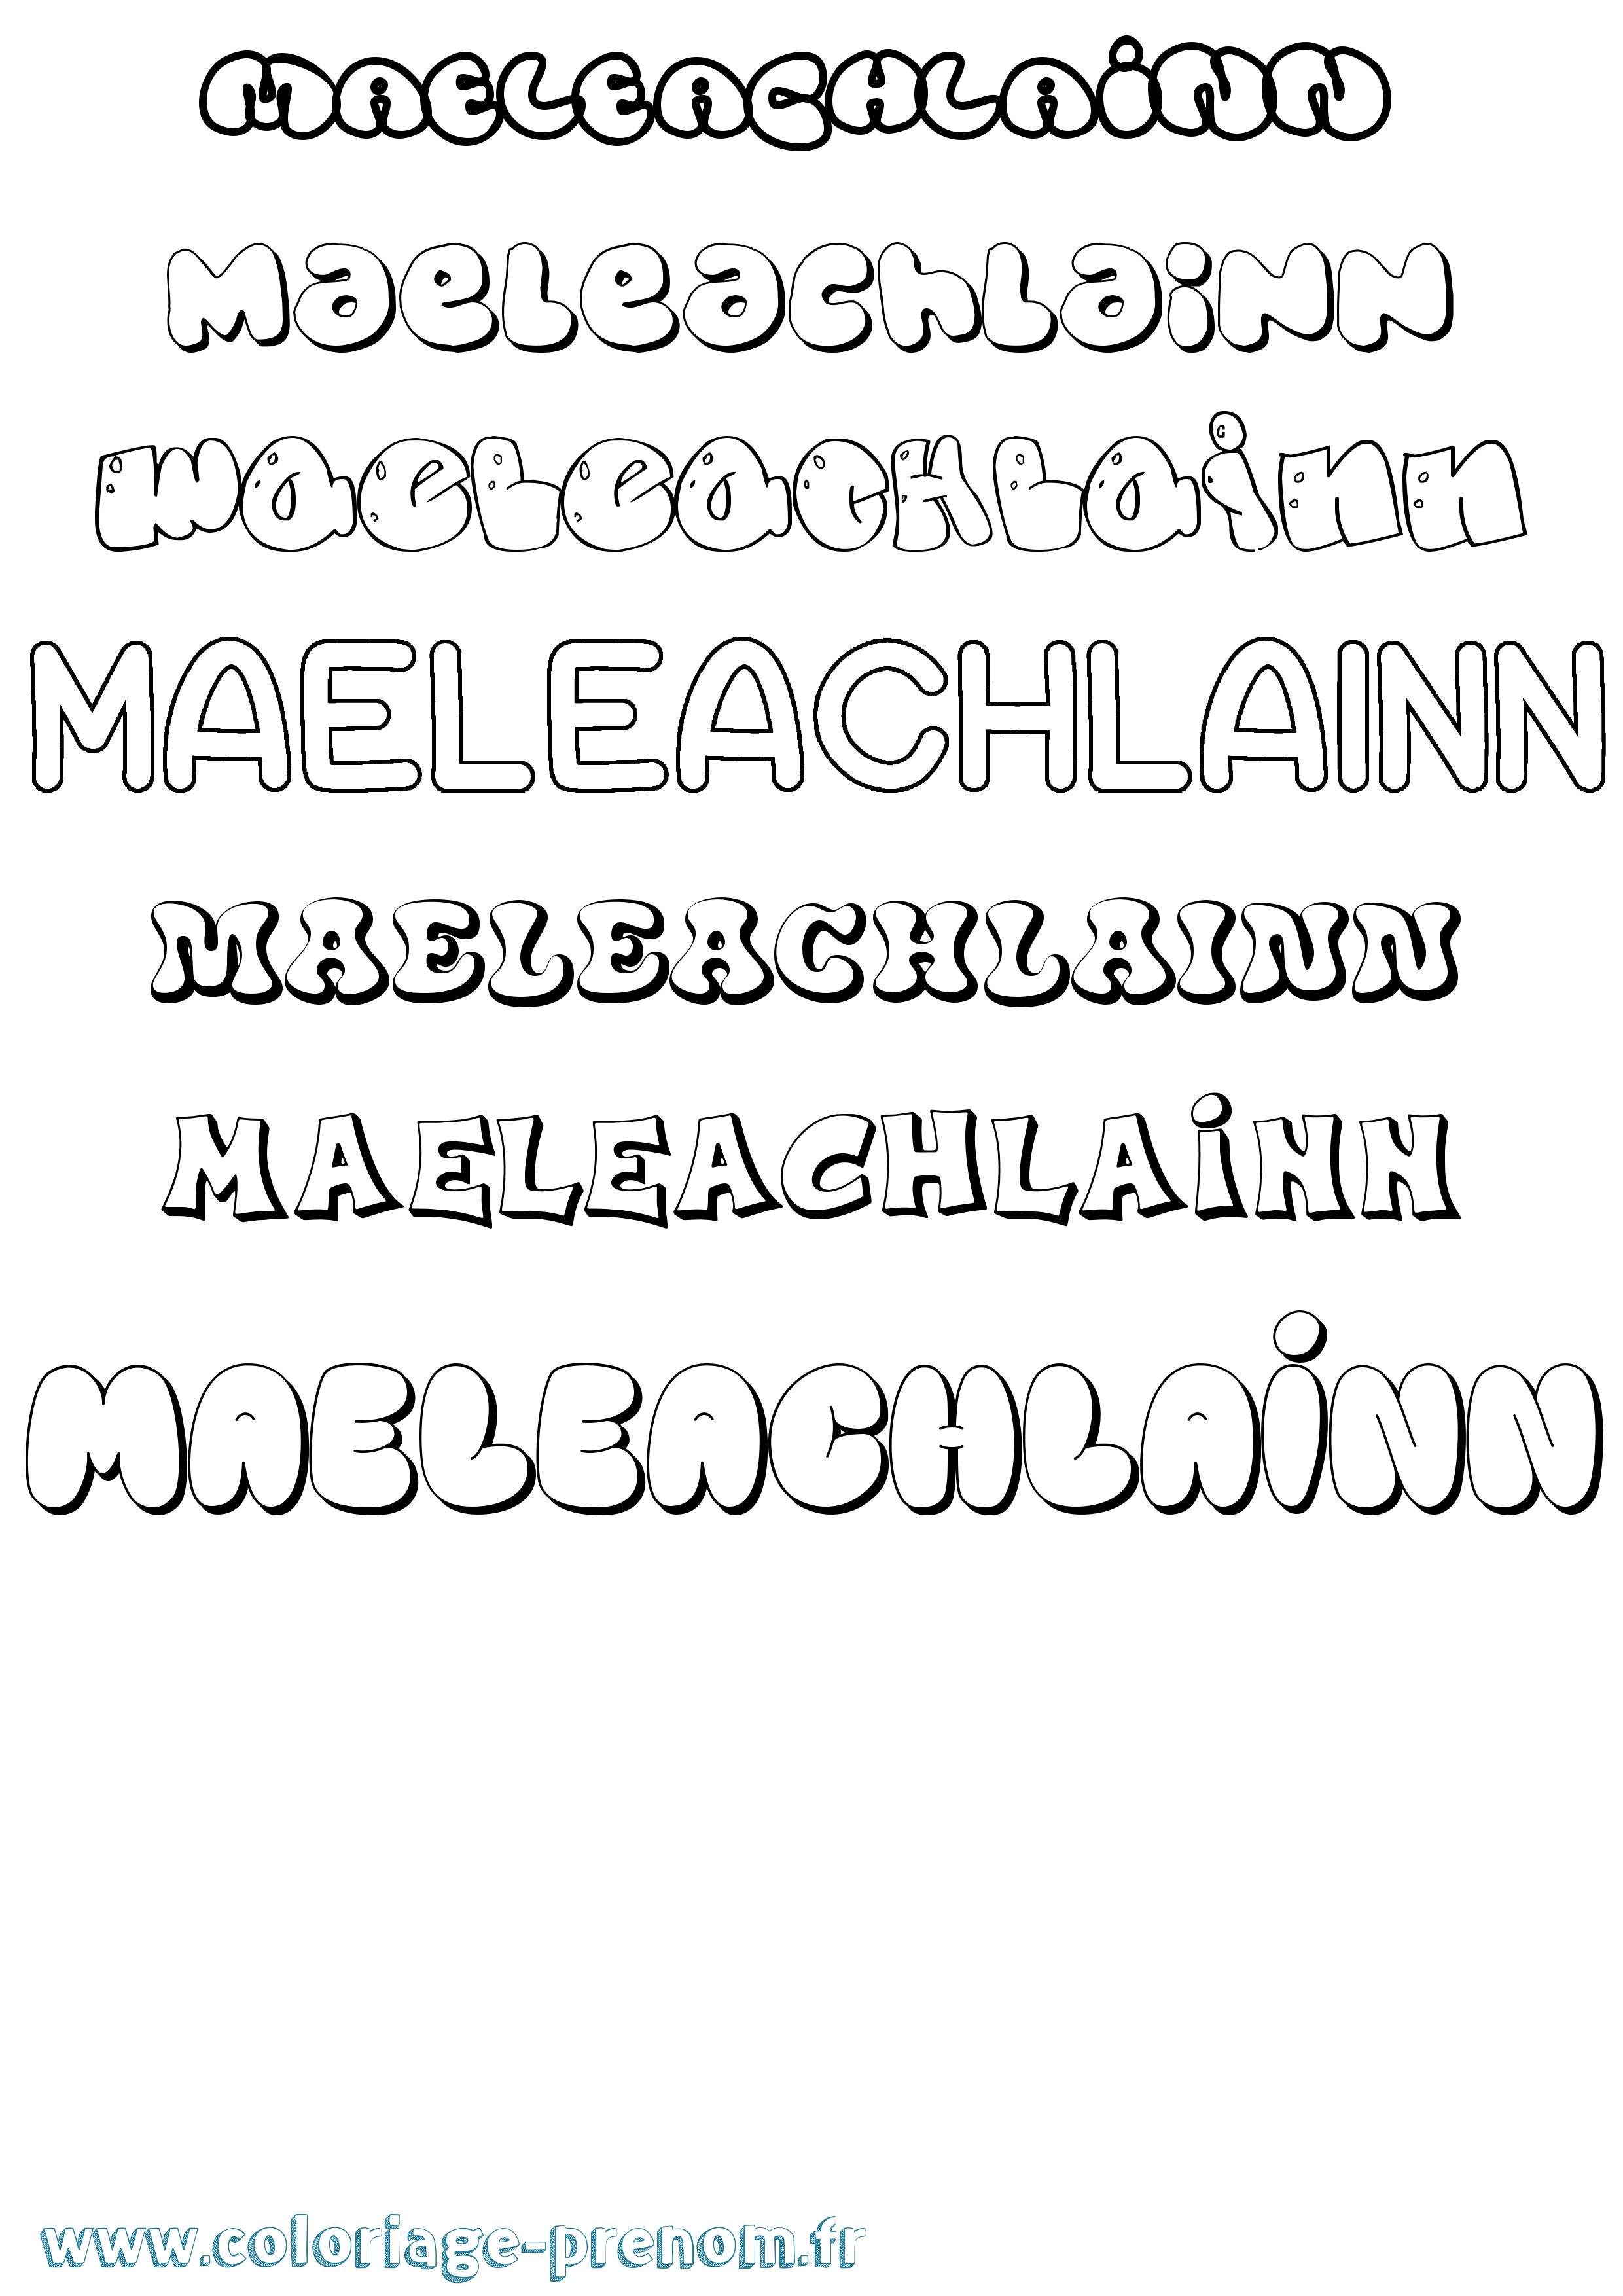 Coloriage prénom Maeleachlainn Bubble